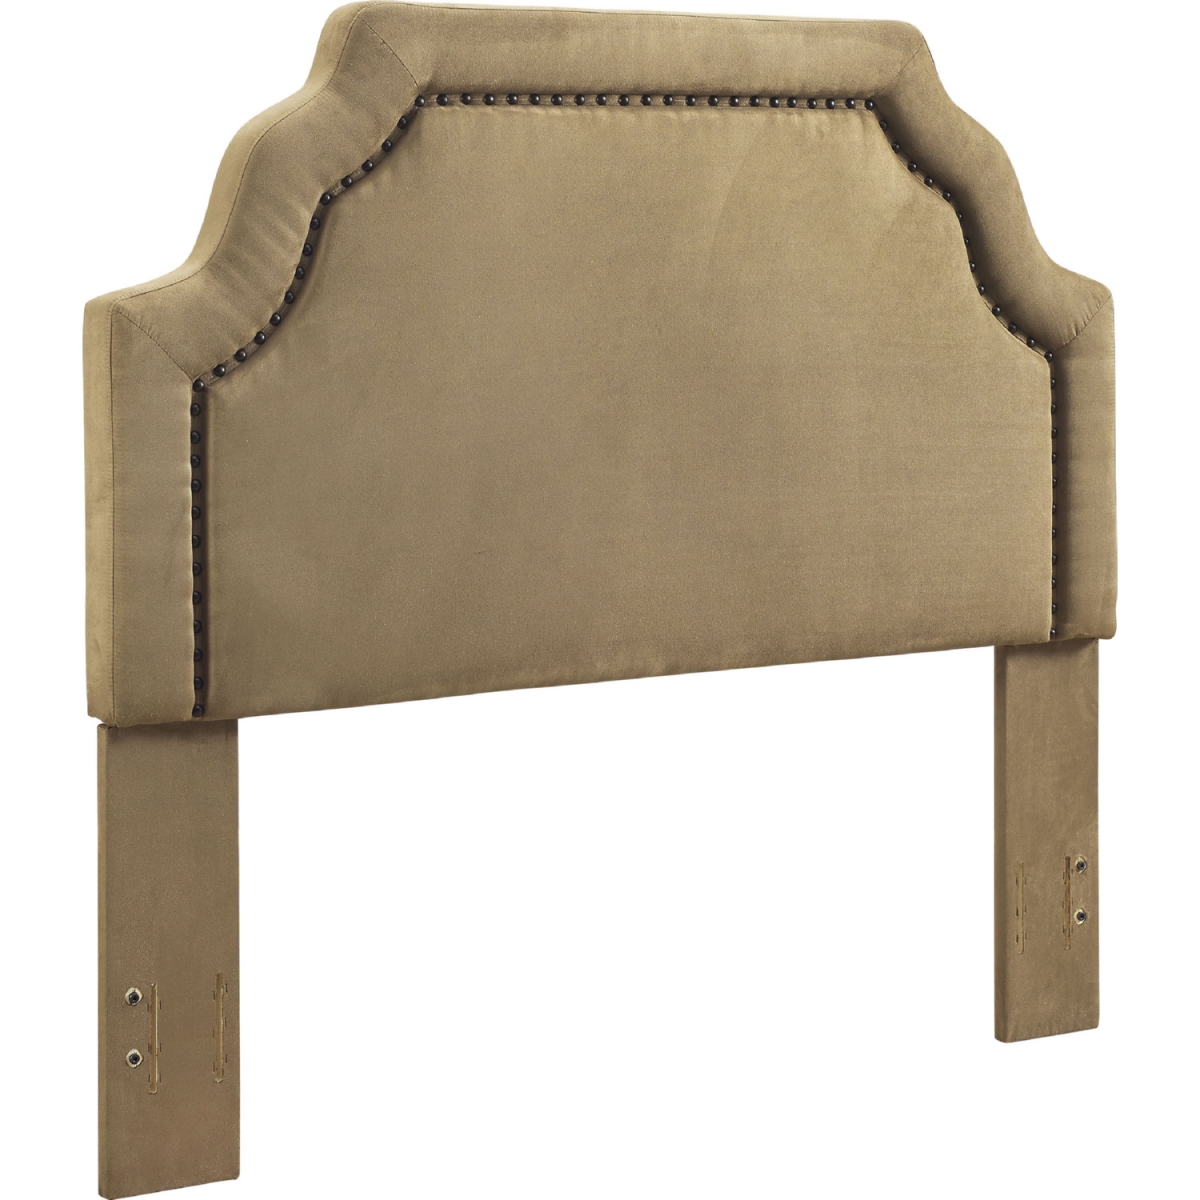 Kf705009ol Loren Keystone Upholstered Queen Bedset, Oatmeal Linen